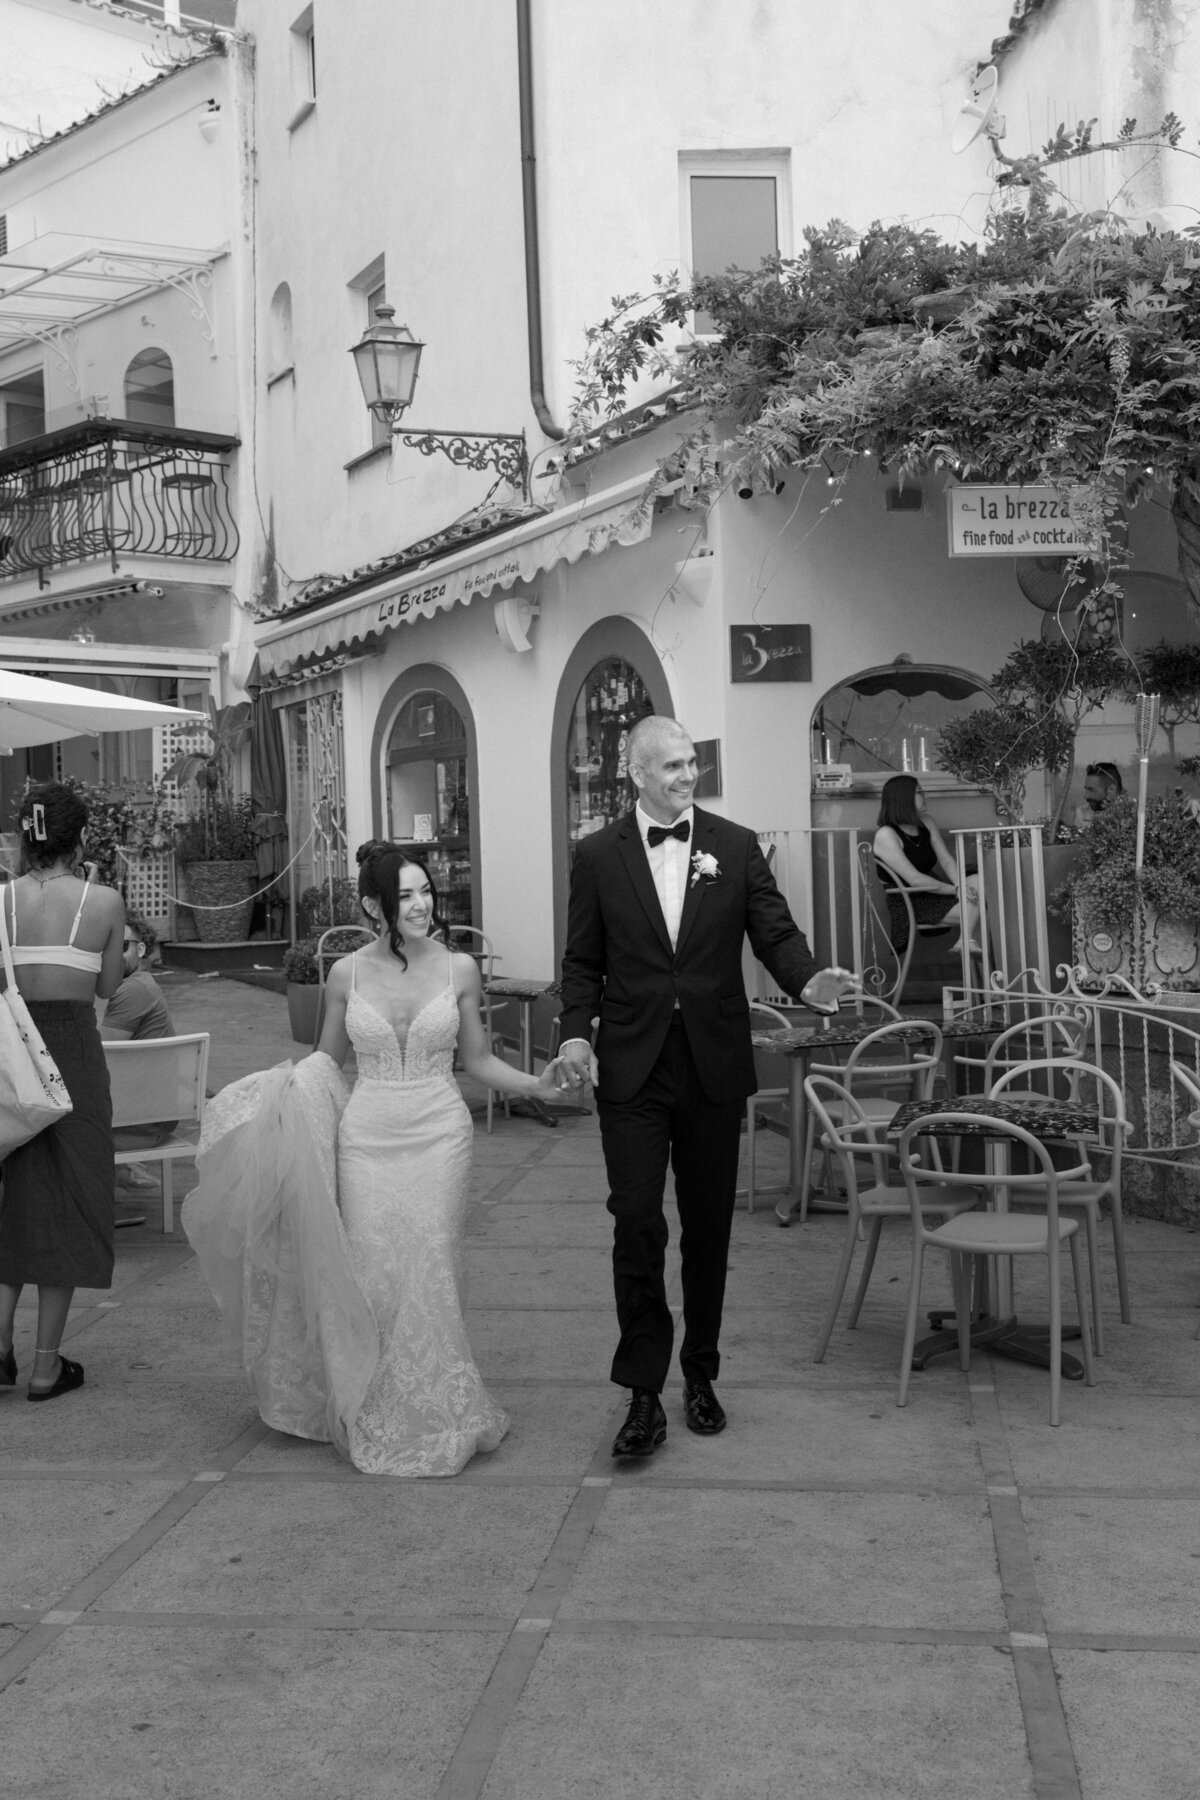 Flora_And_Grace_Positano_AmalfiCoast_Editorial_Wedding_Photographer (1 von 1)-2